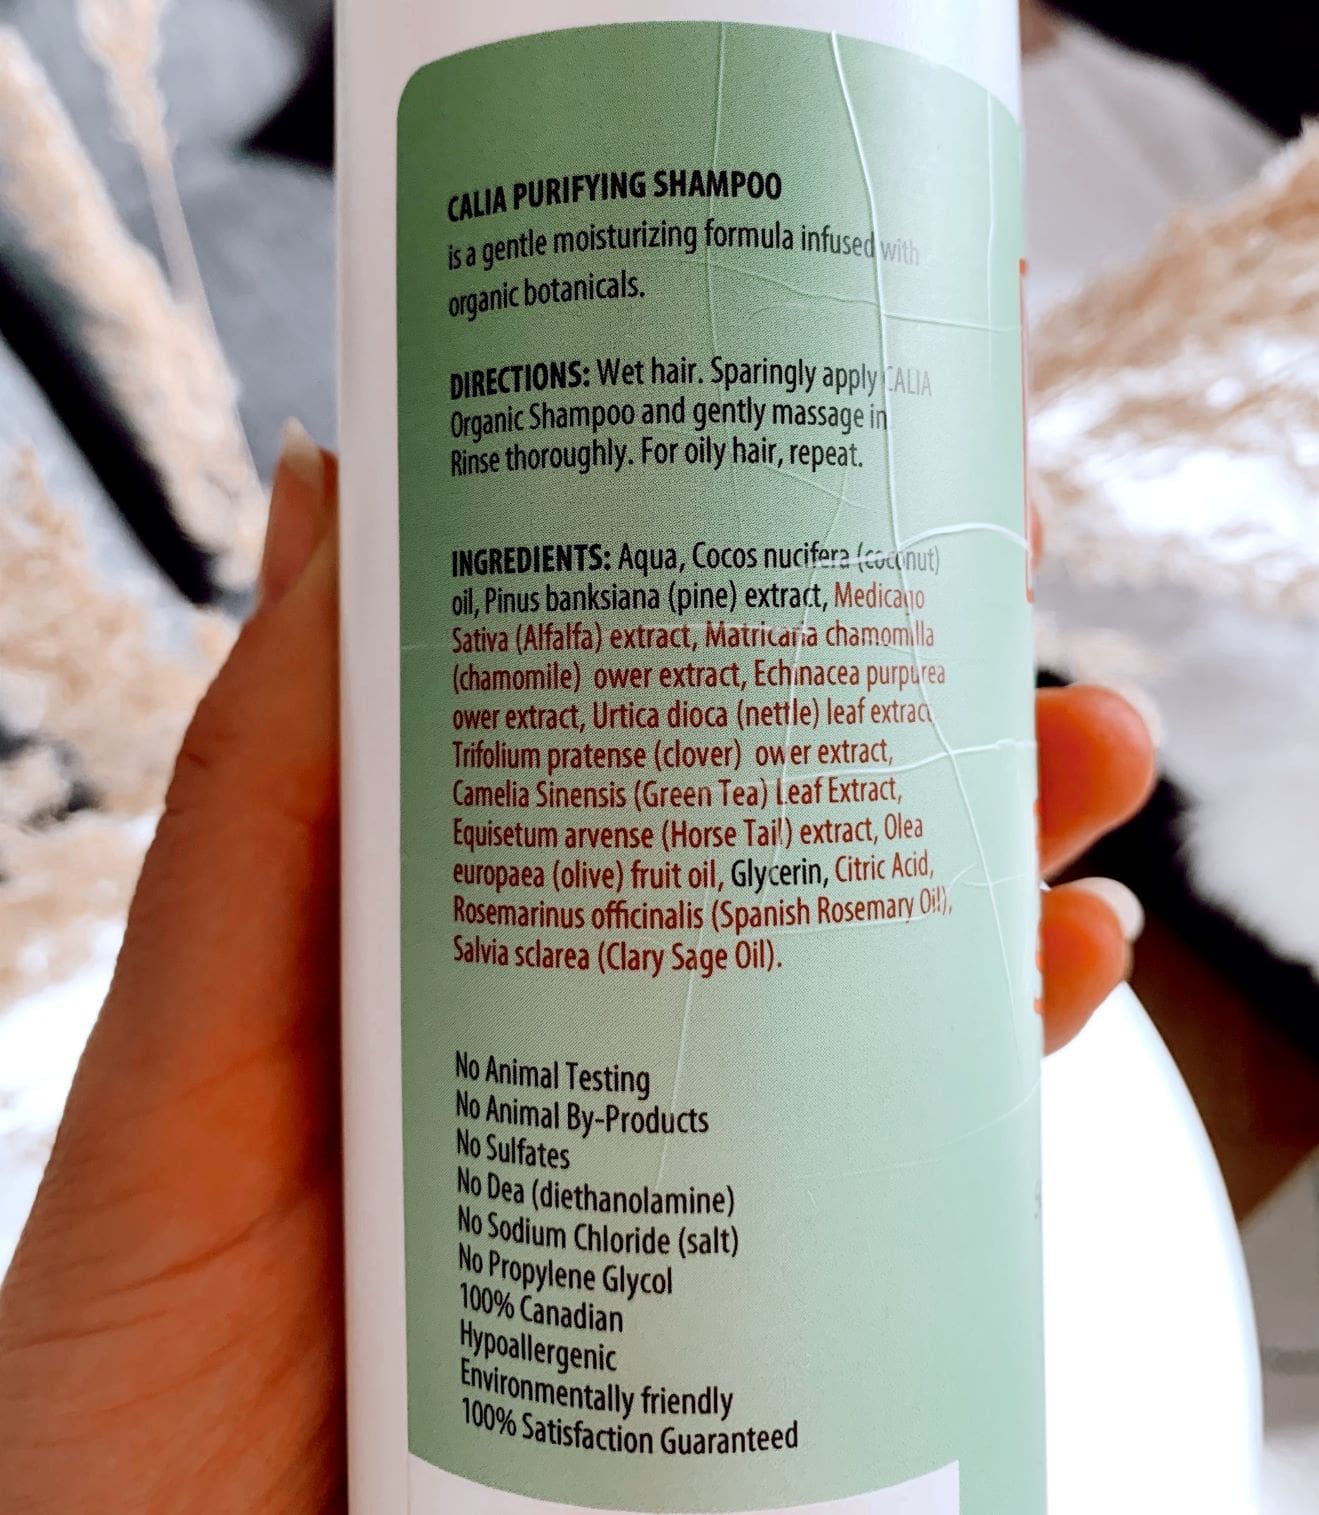 Ingredient list of Calia purifying shampoo